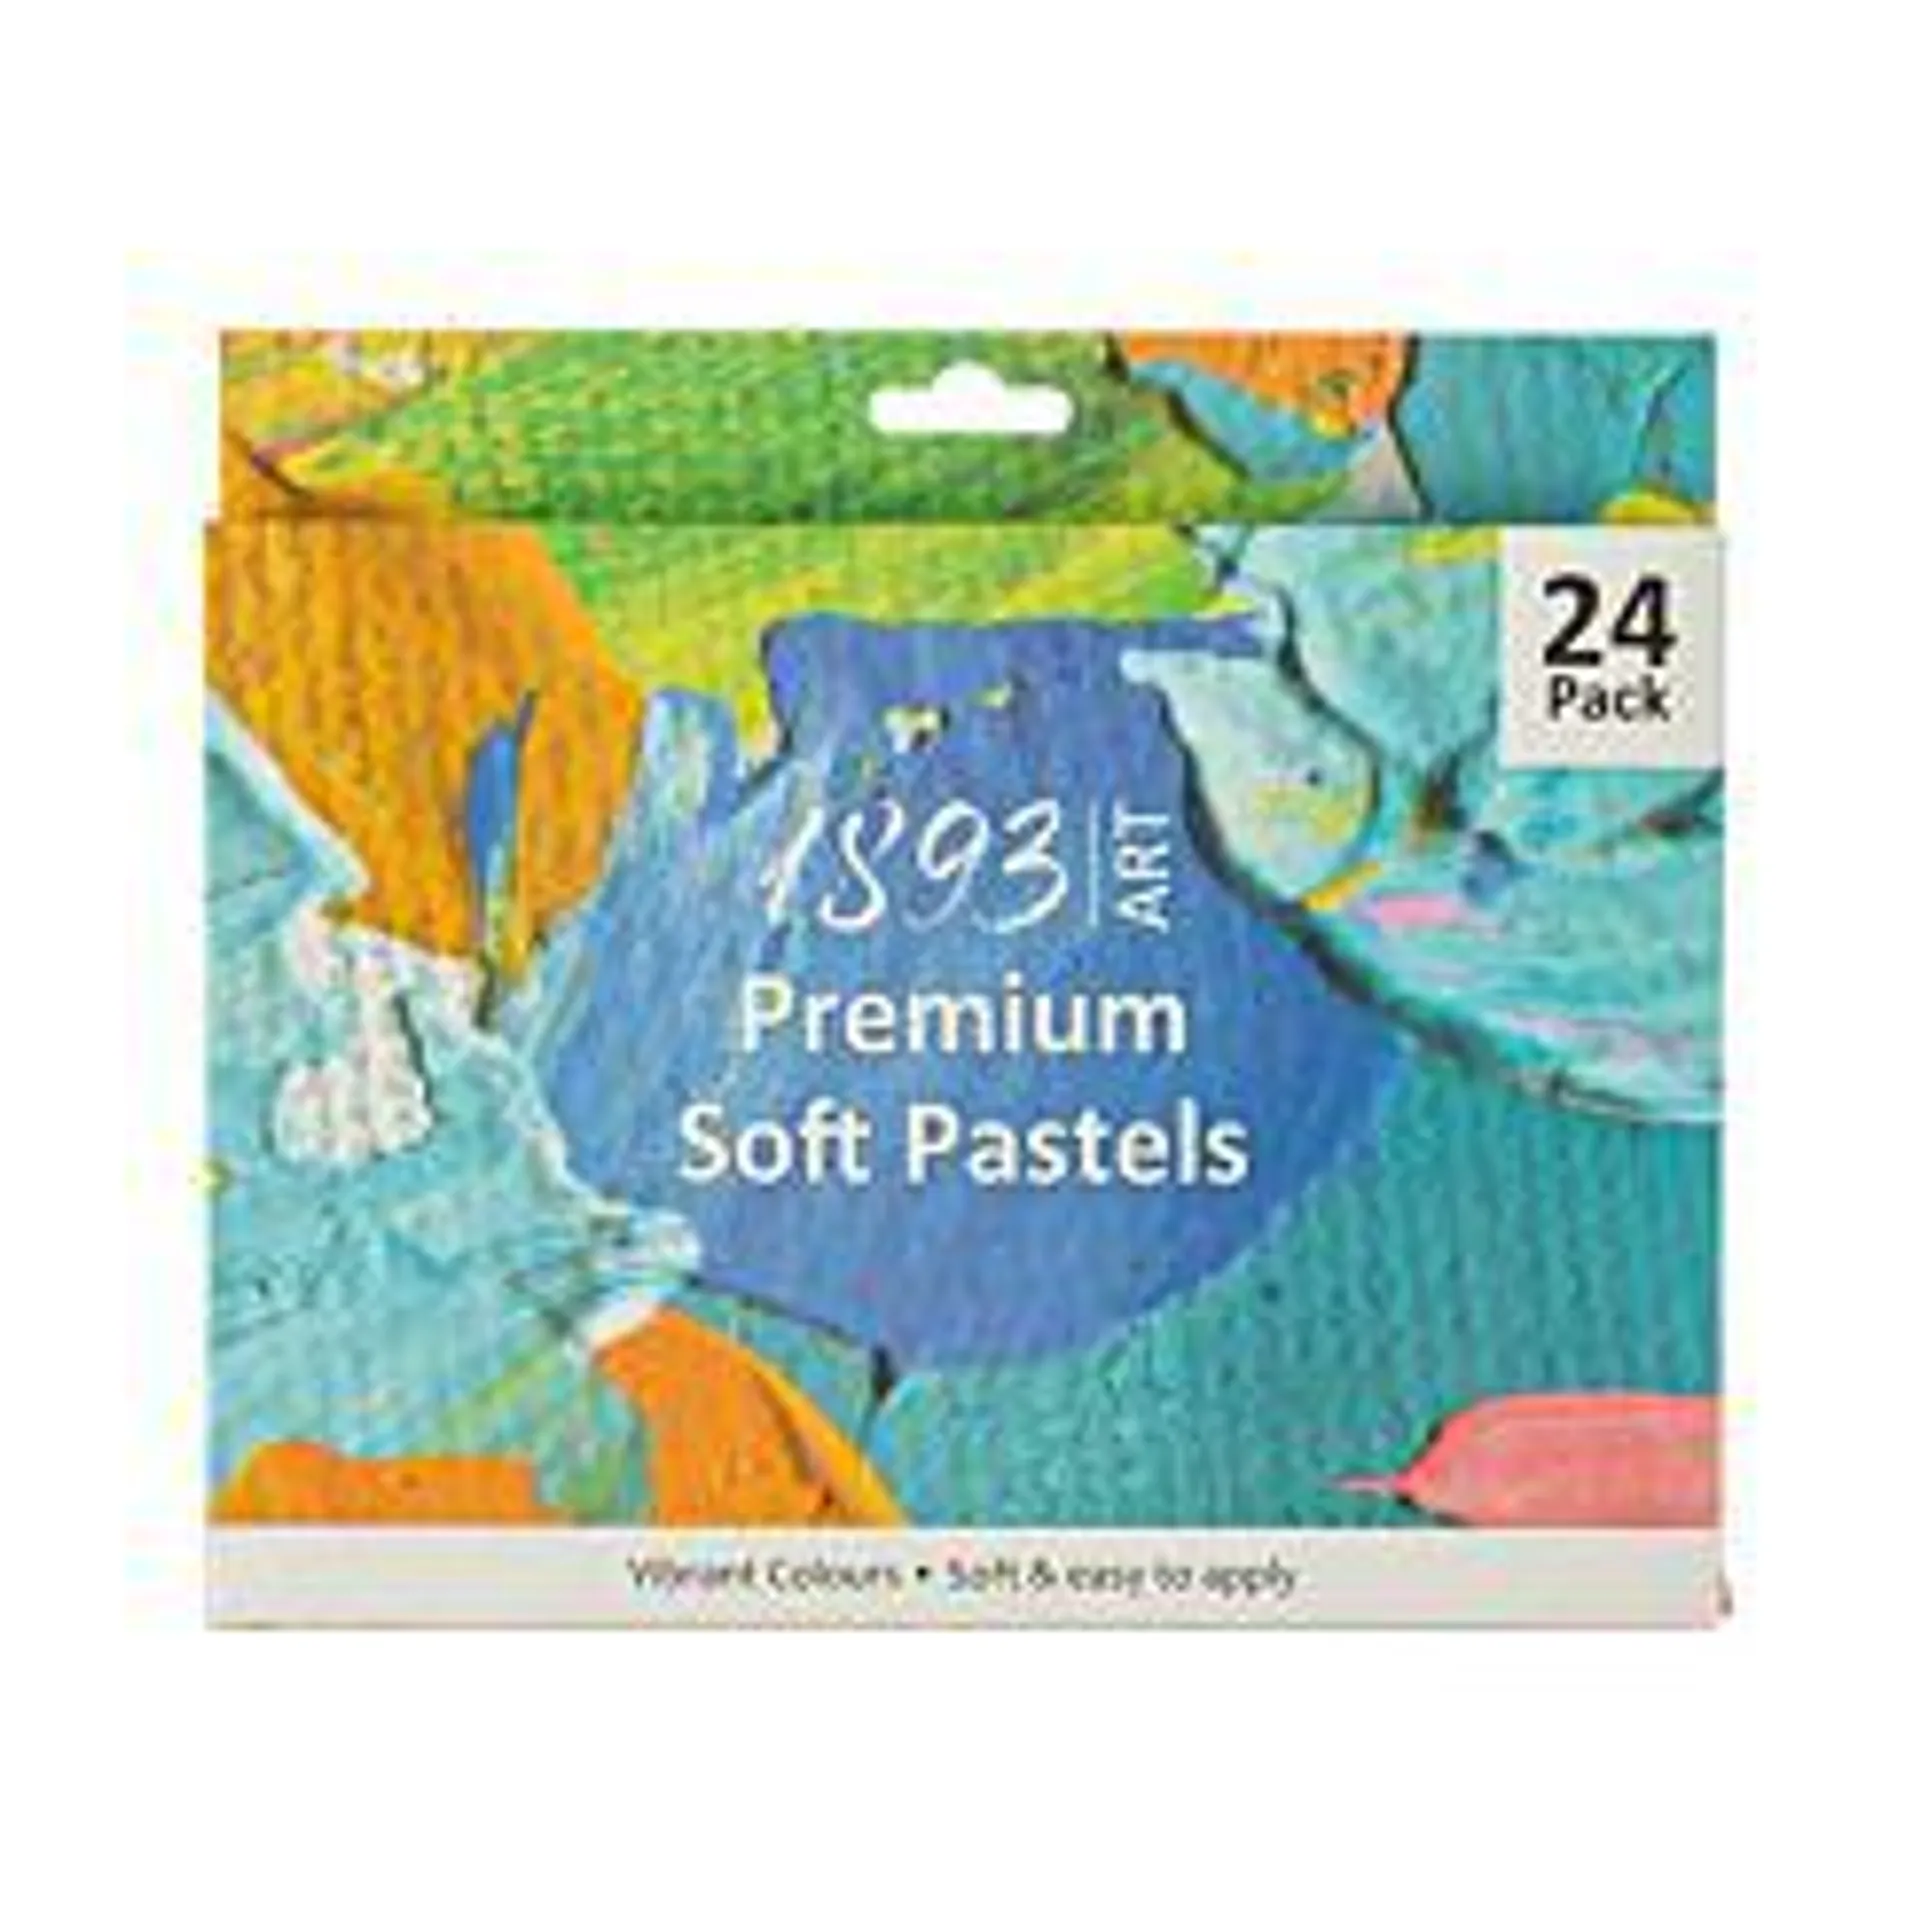 1893 Art Premium Soft Pastels Pack of 24